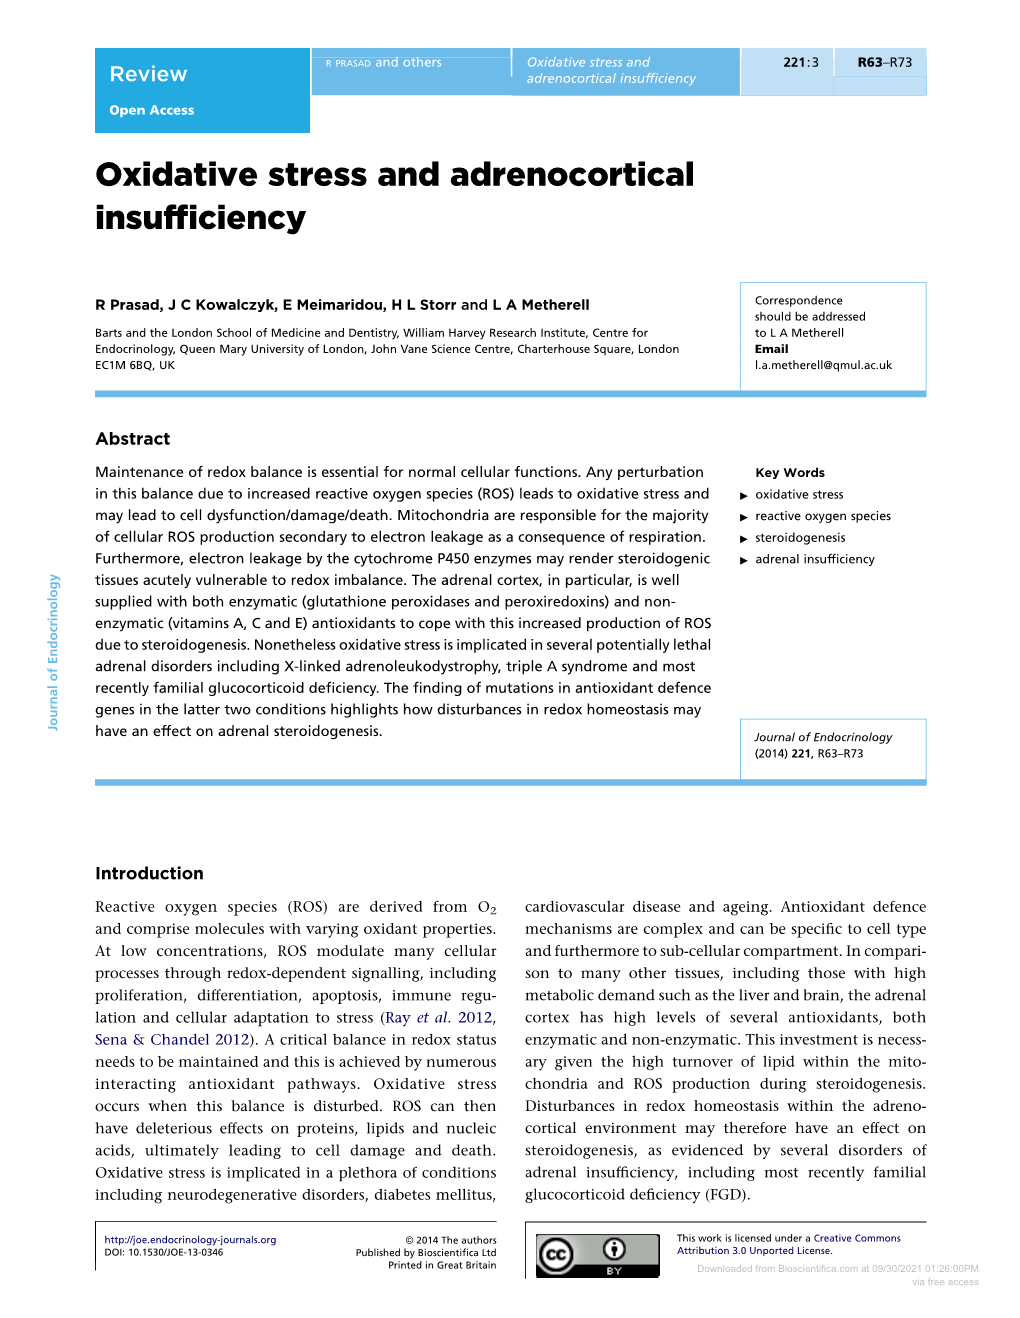 Oxidative Stress and Adrenocortical Insufficiency